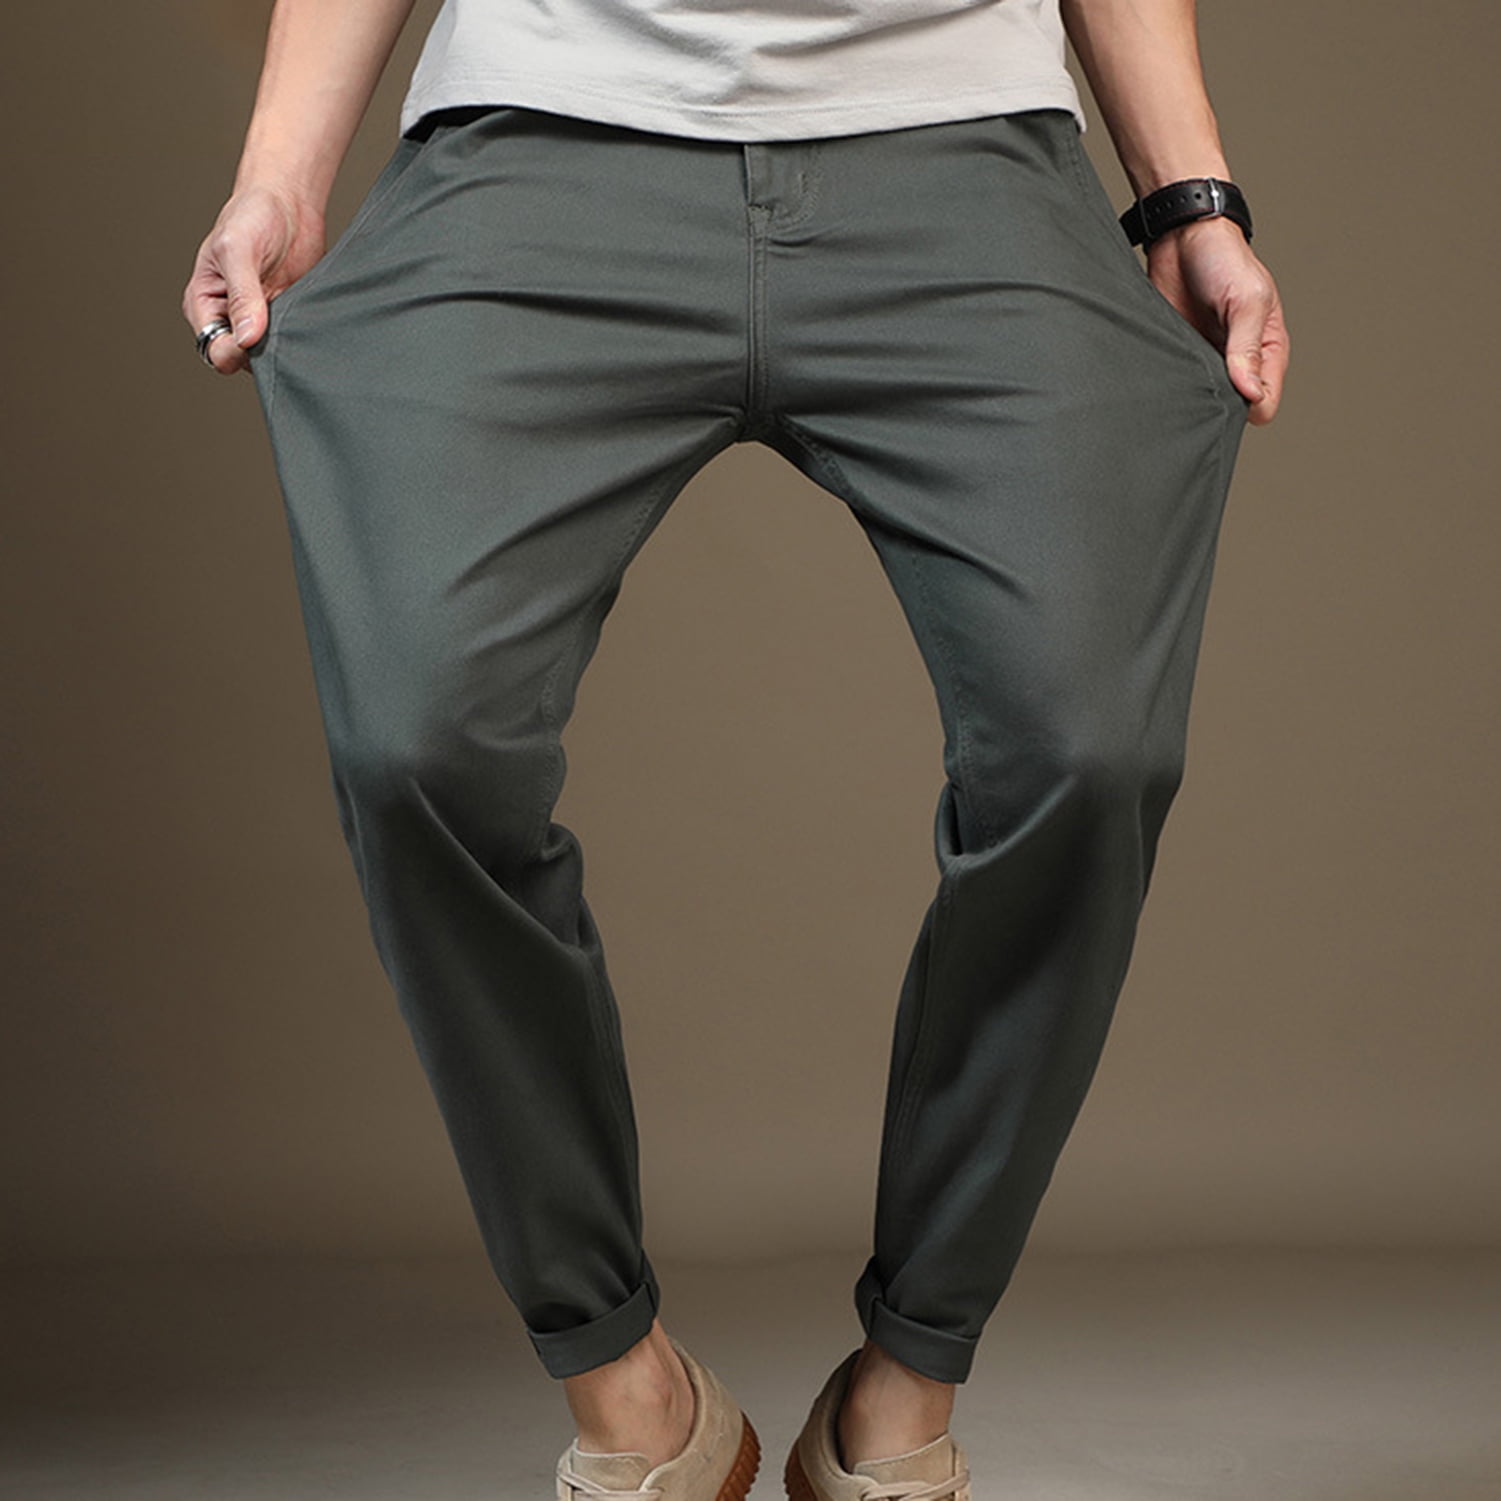 Buy Men Black Slim Fit Solid Casual Trousers Online  794184  Allen Solly